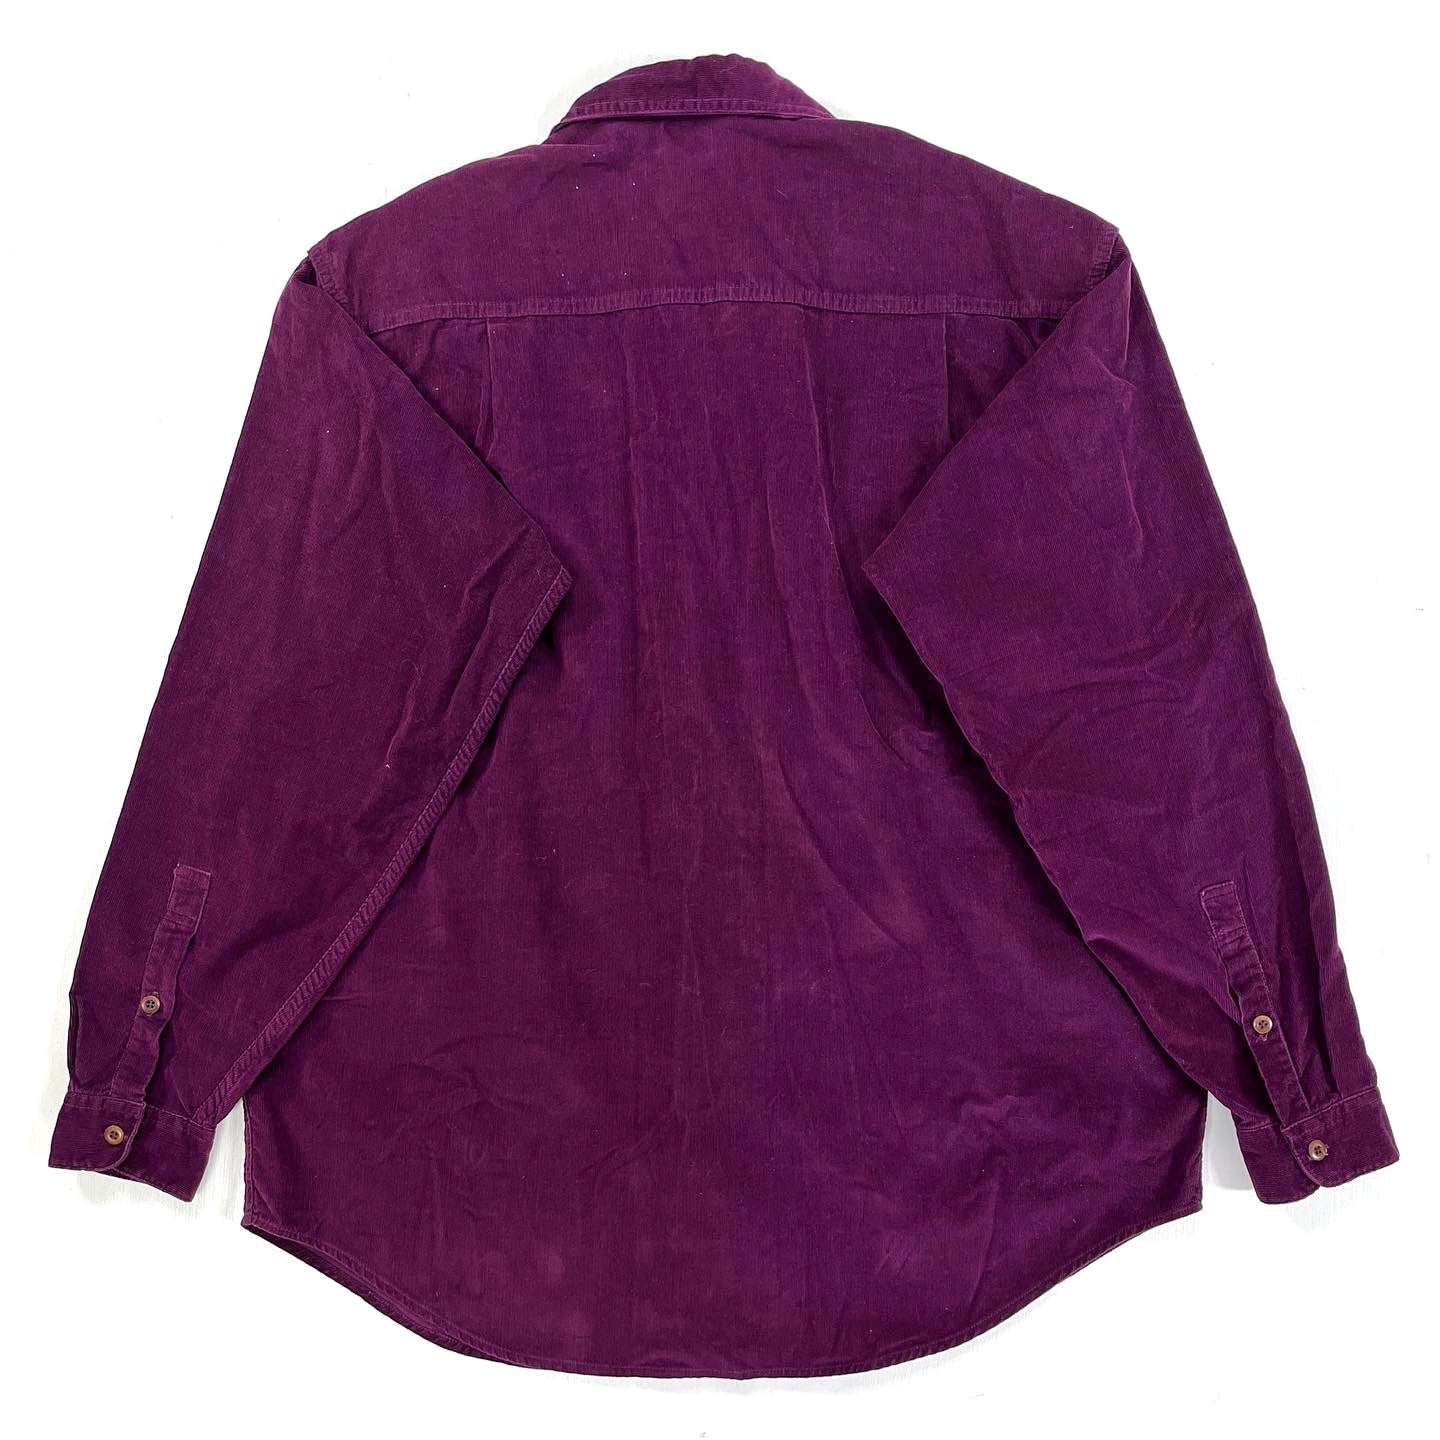 1991 Patagonia Lightweight Cotton Corduroy Shirt, Deep Plum (L)